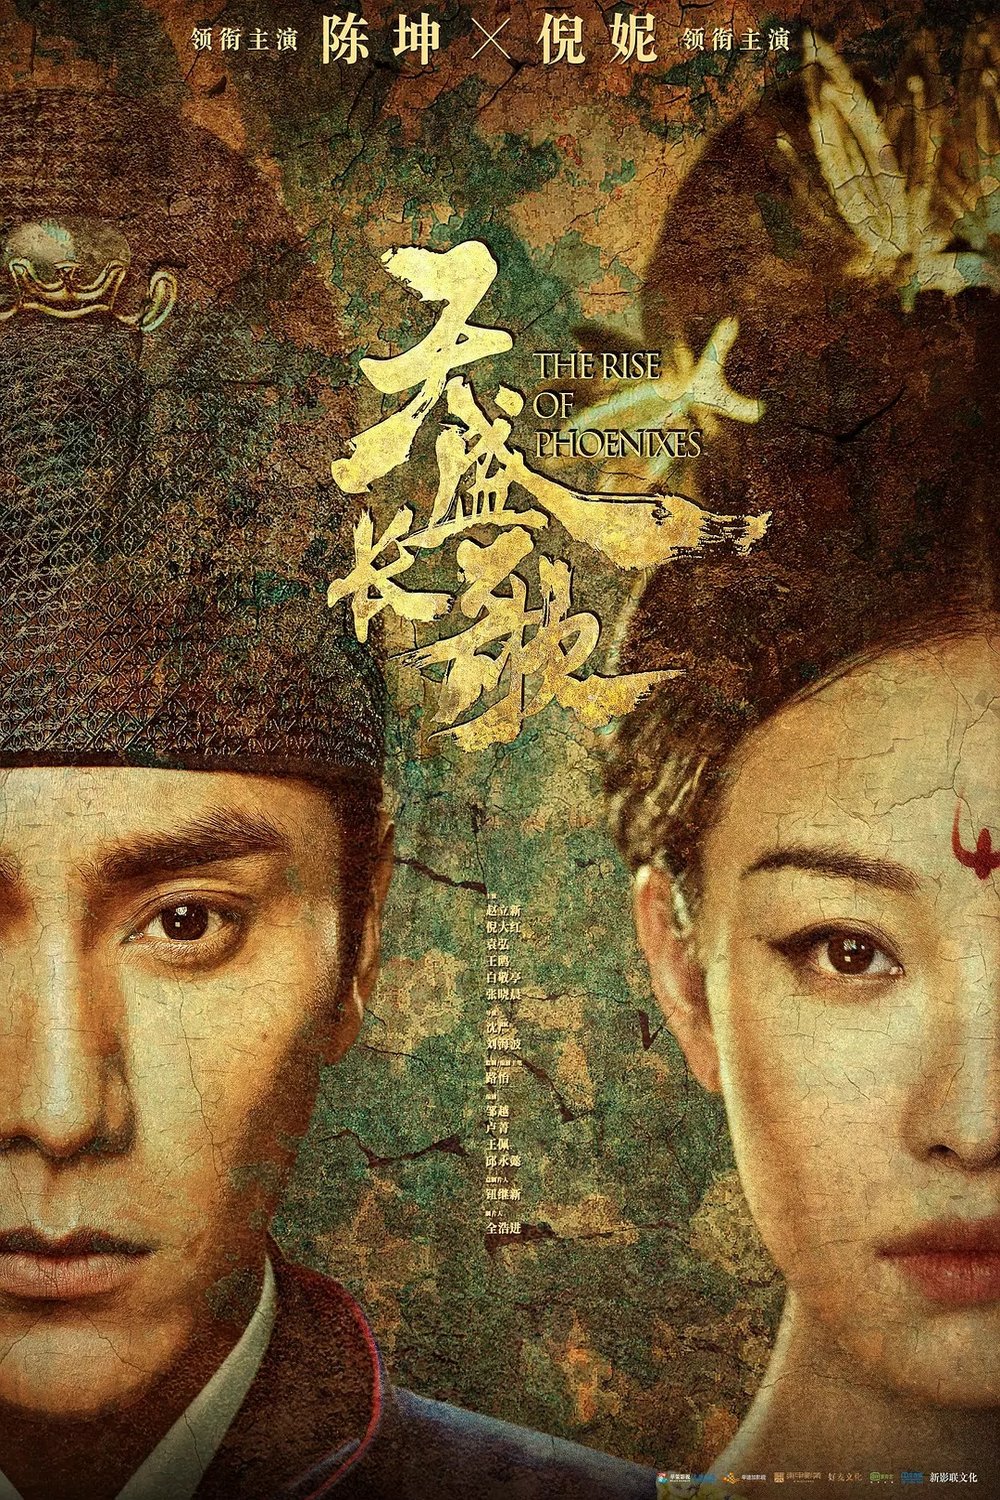 Mandarin poster of the movie Tian sheng chang ge